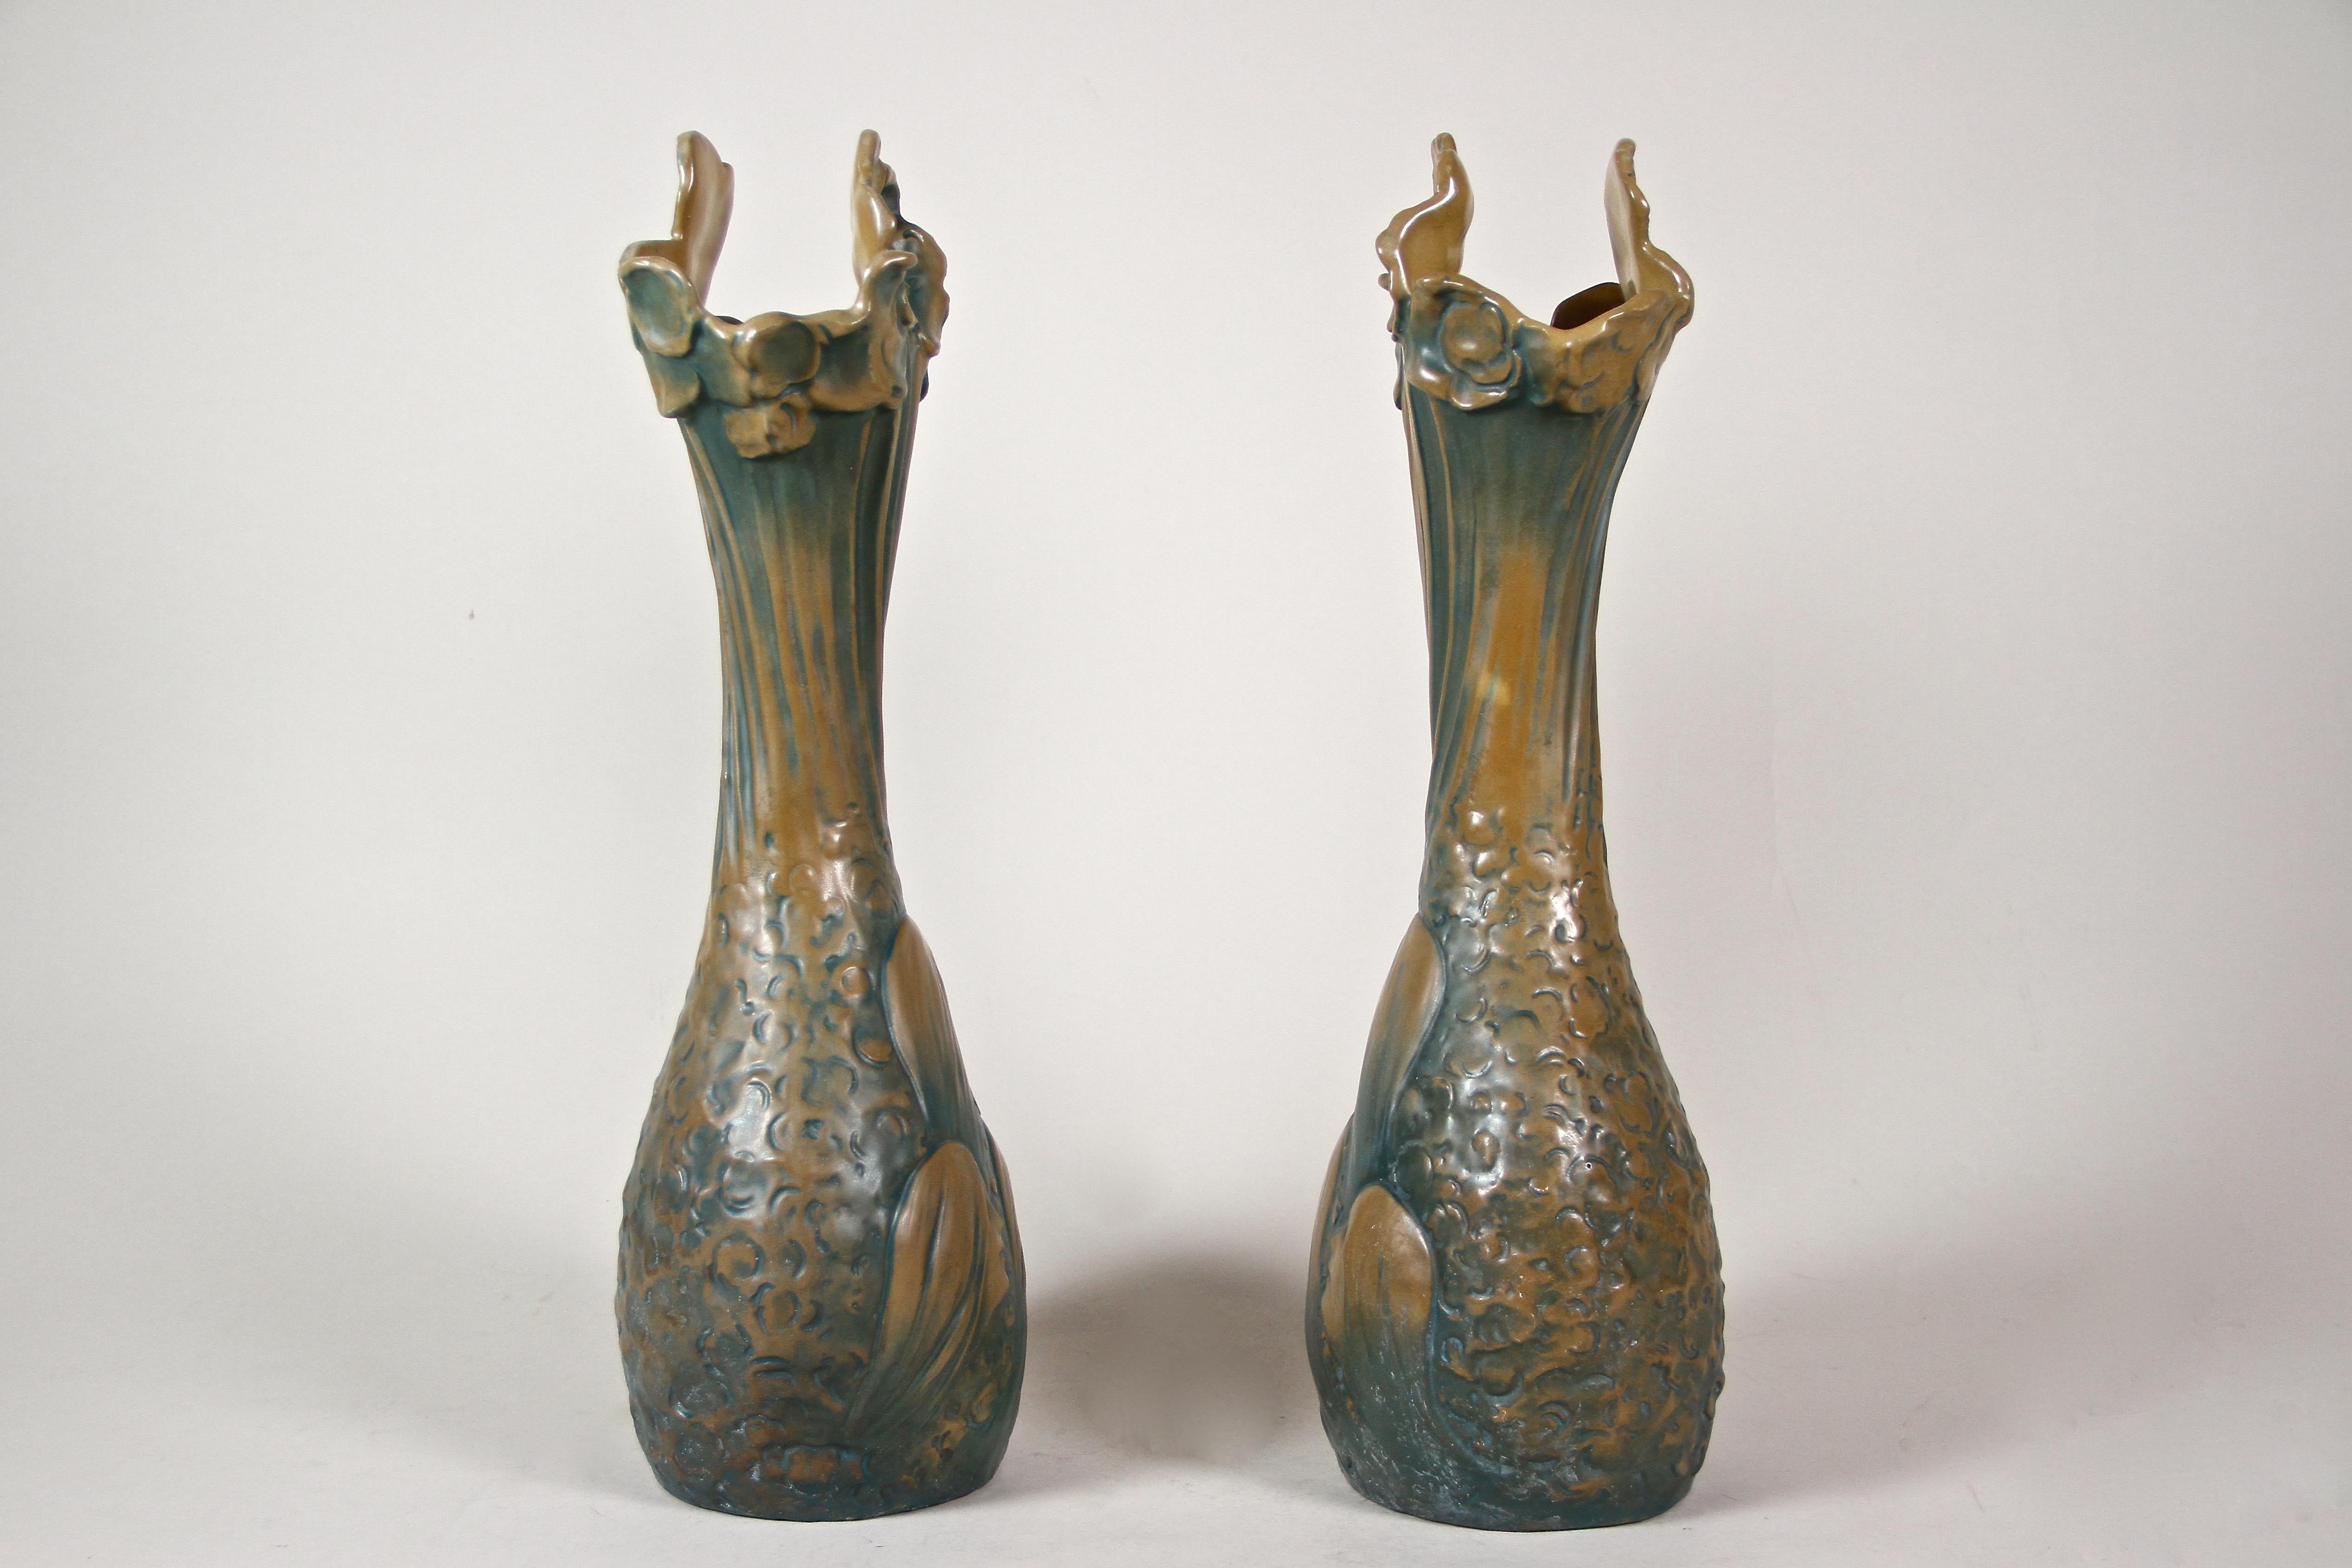 20th Century Pair of Art Nouveau Majolica Vases by B. Bloch Eichwald, Bohemia, circa 1900